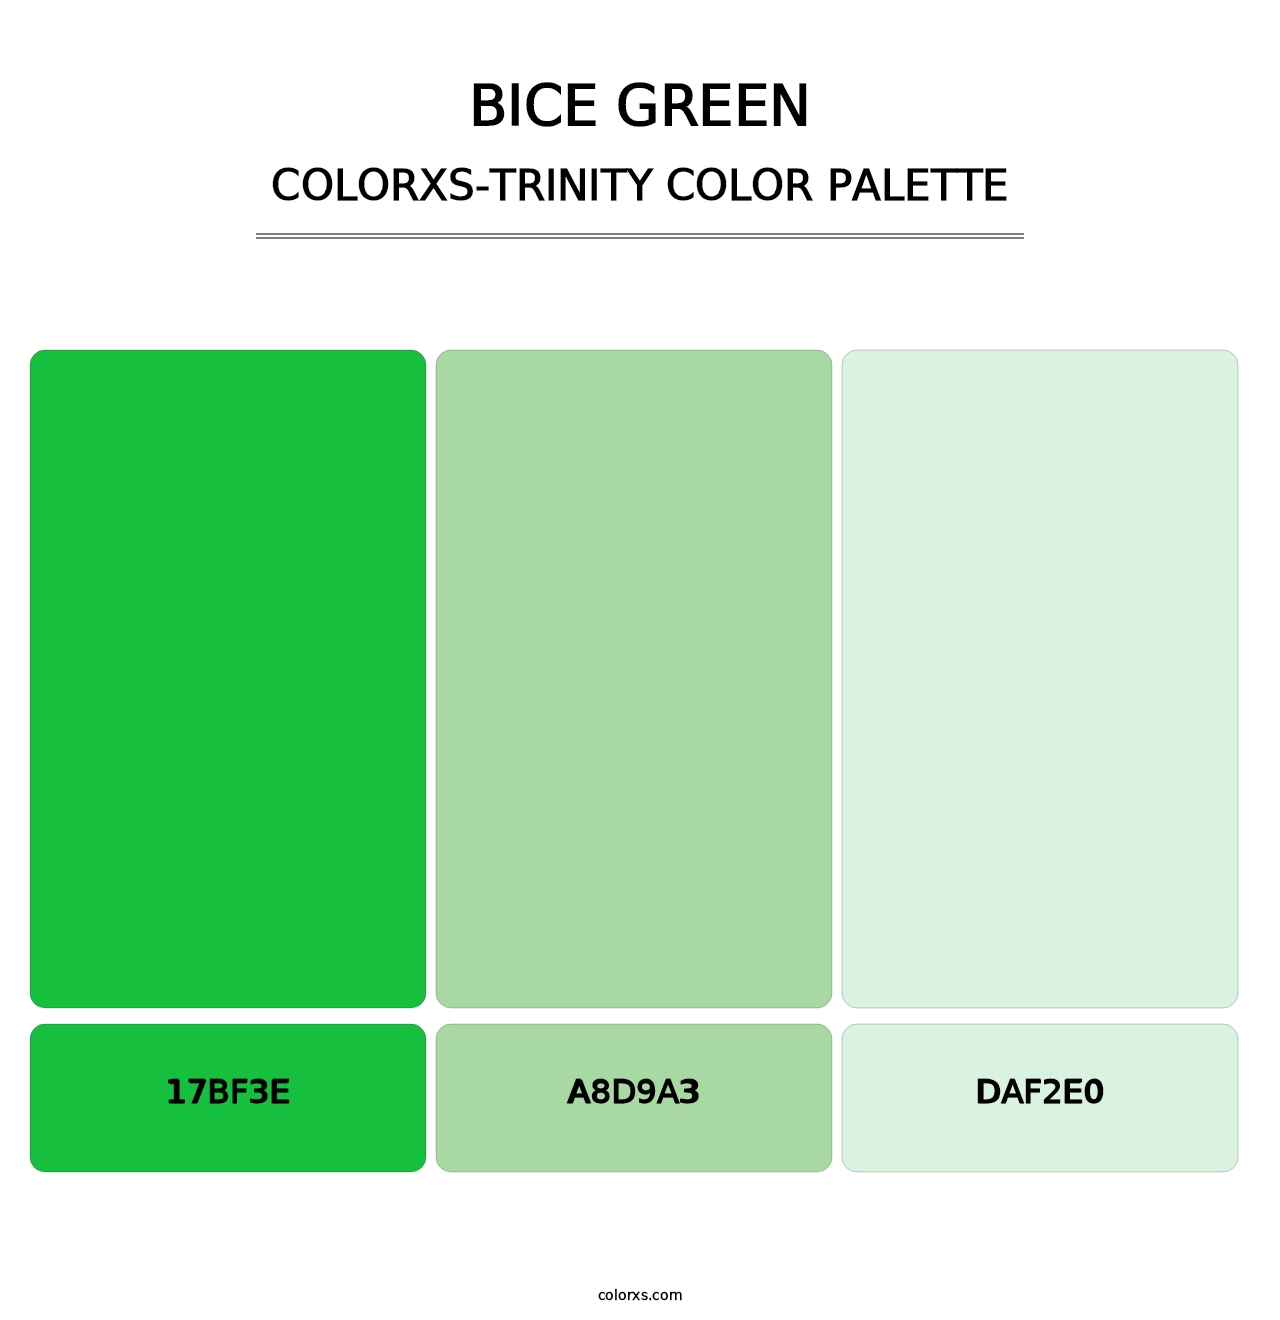 Bice Green - Colorxs Trinity Palette